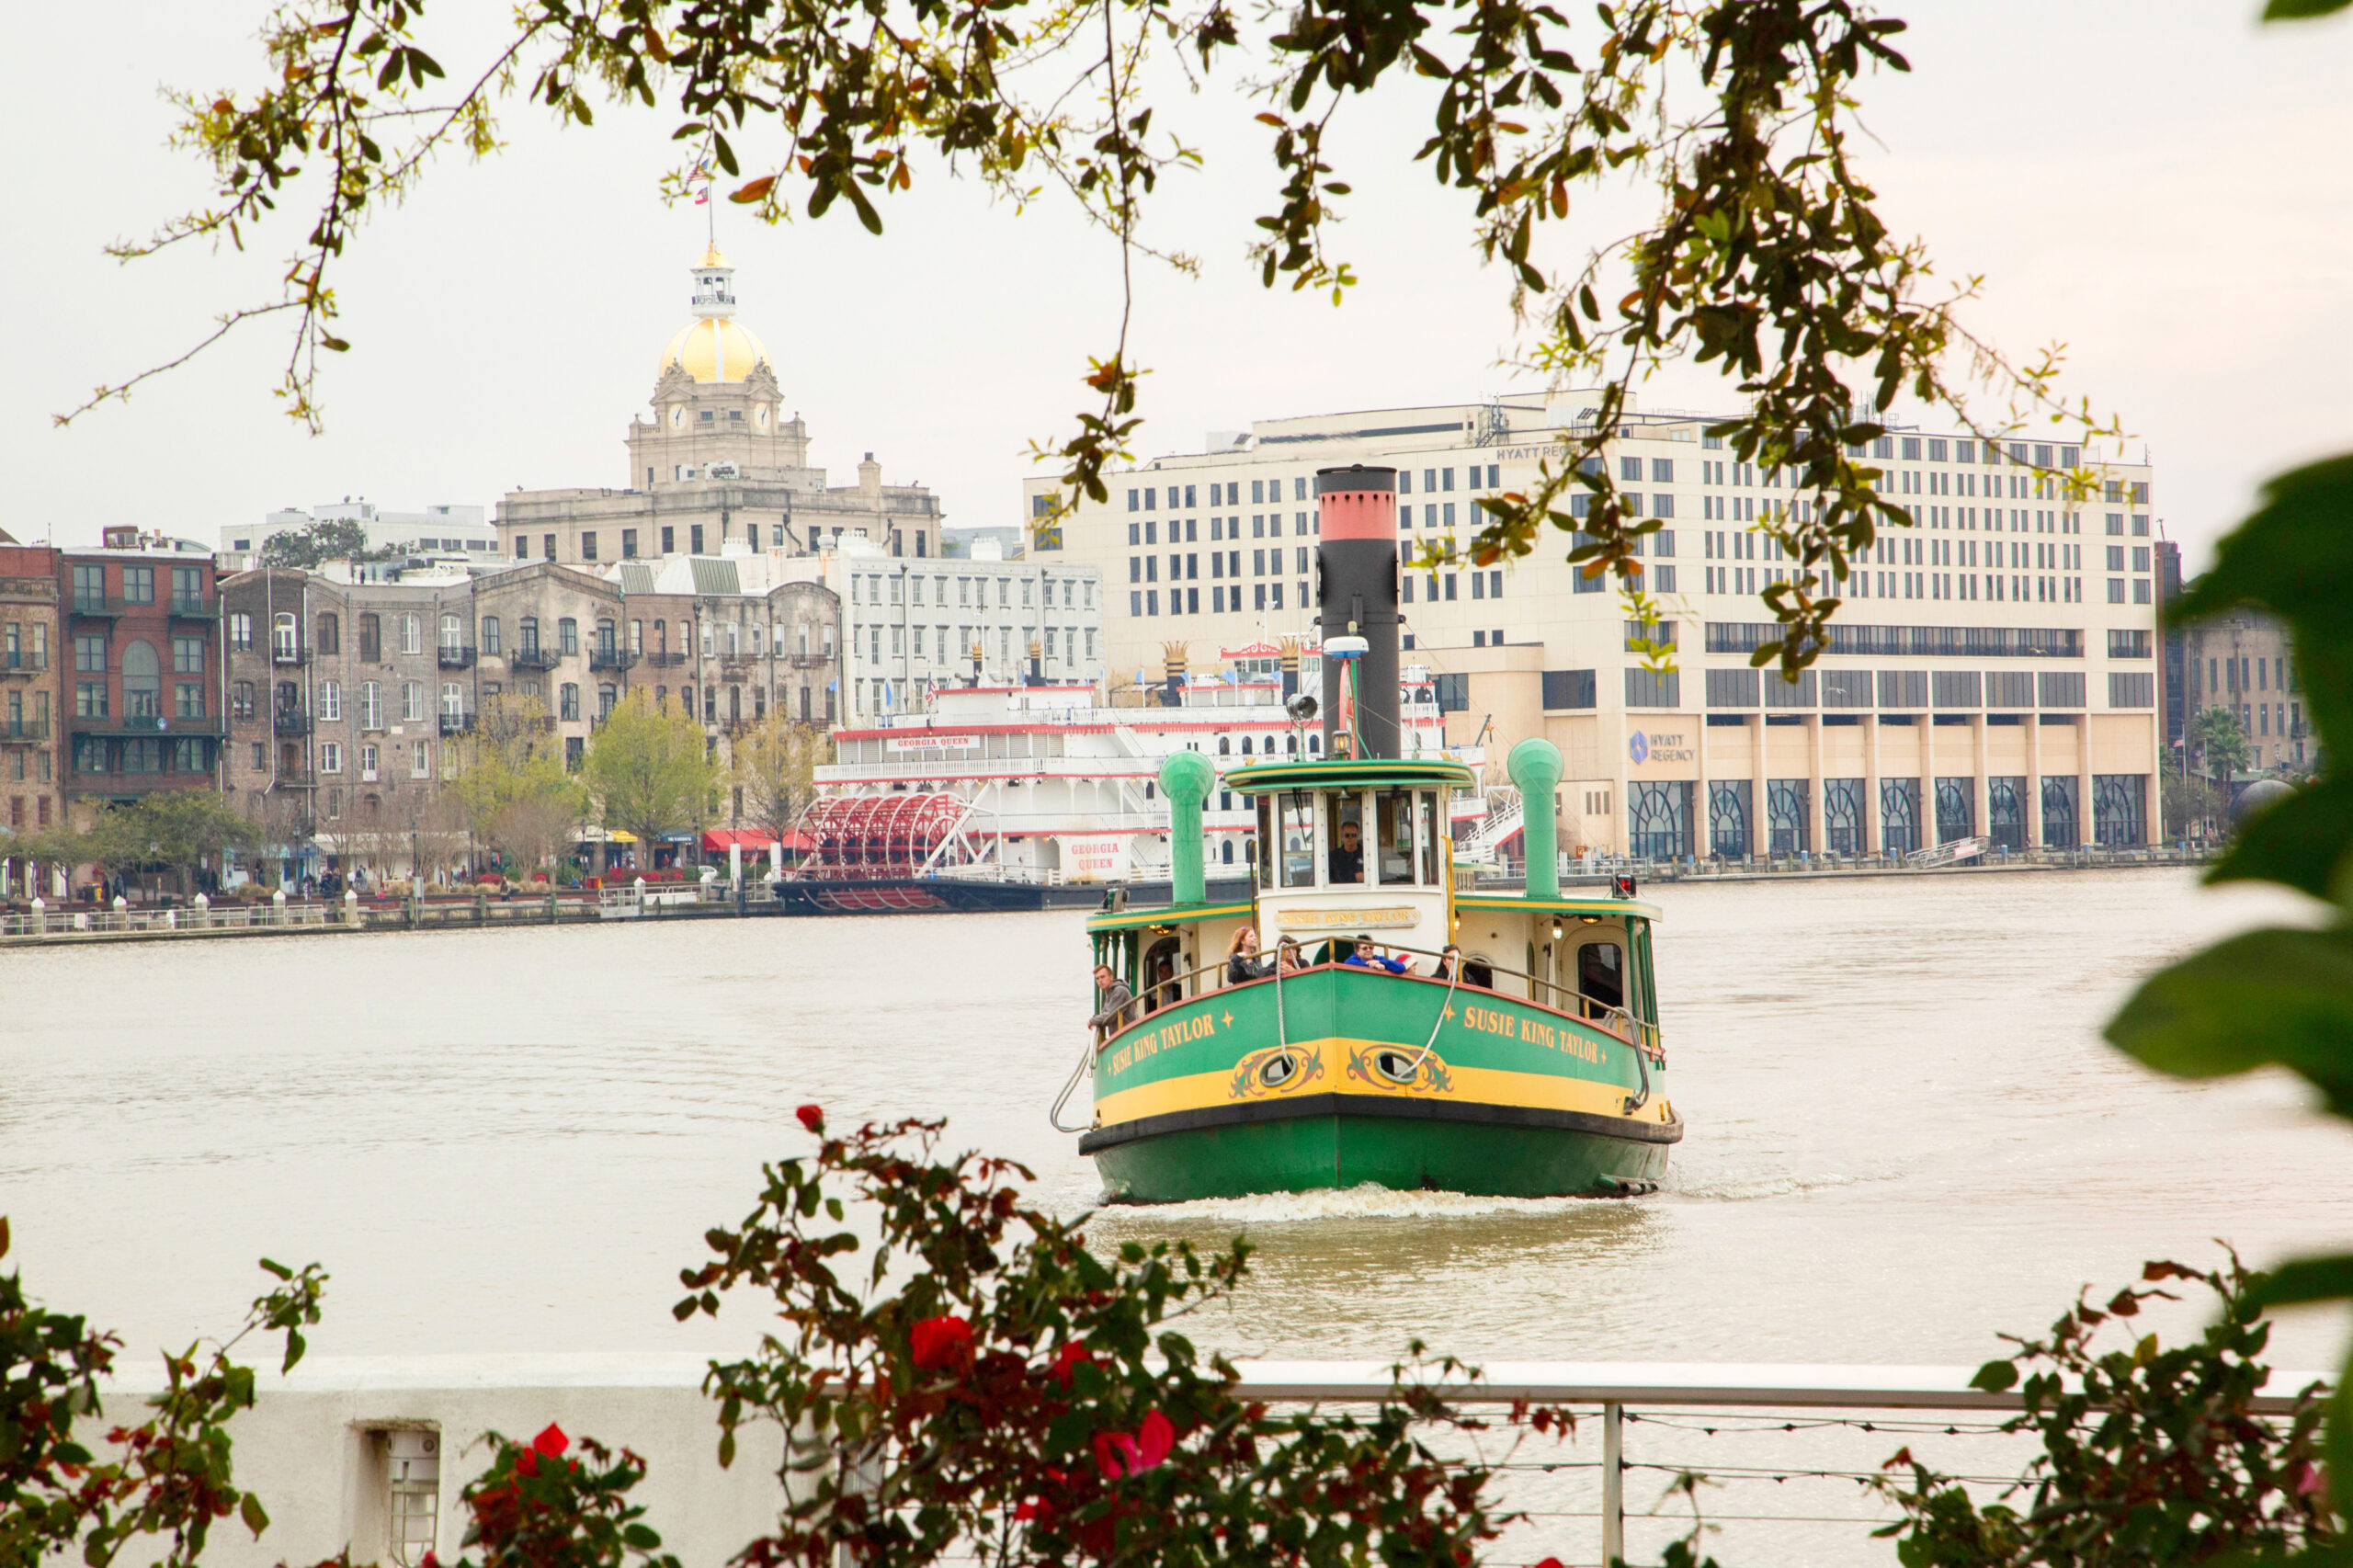 Cruise boat in Savannah